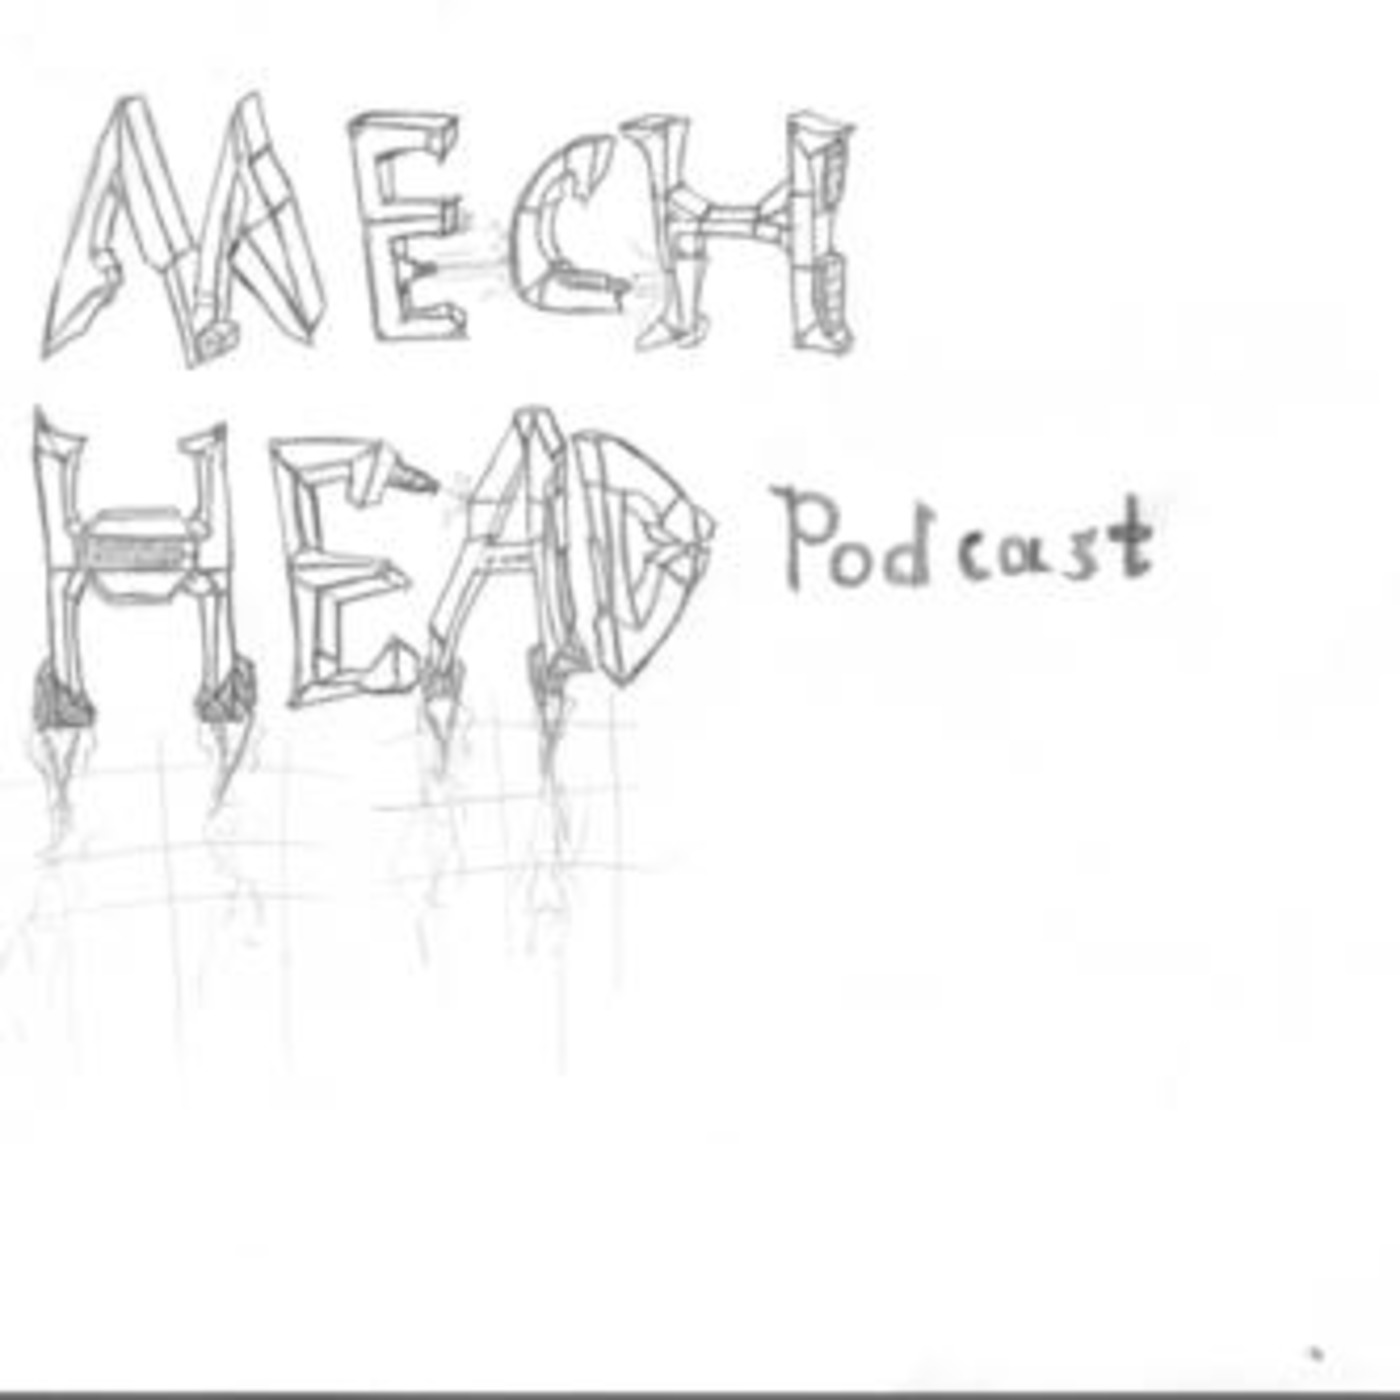 MechHead Podcast #27!